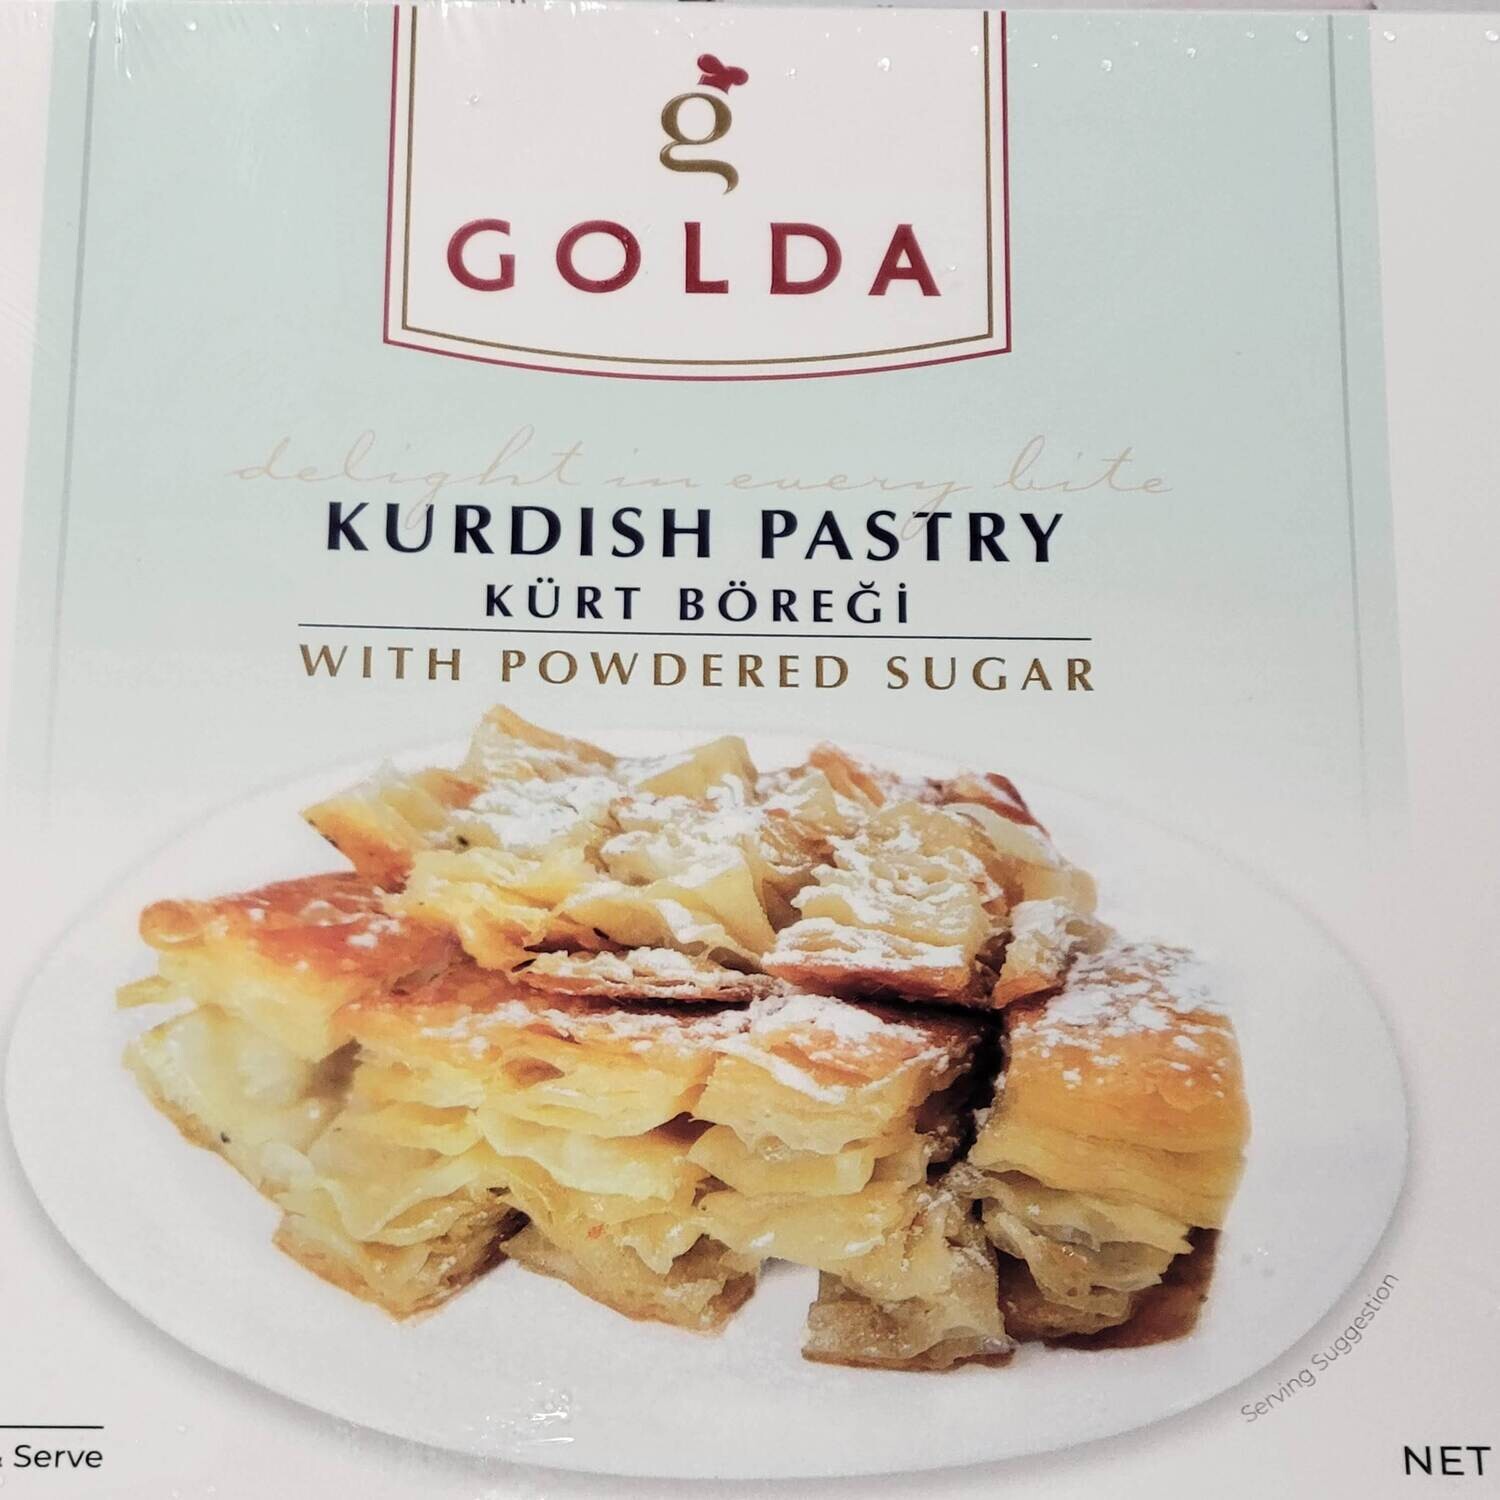 GOLDA Kurt Boregi - Kurdish Pastry With Powdered Sugar (Frozen)